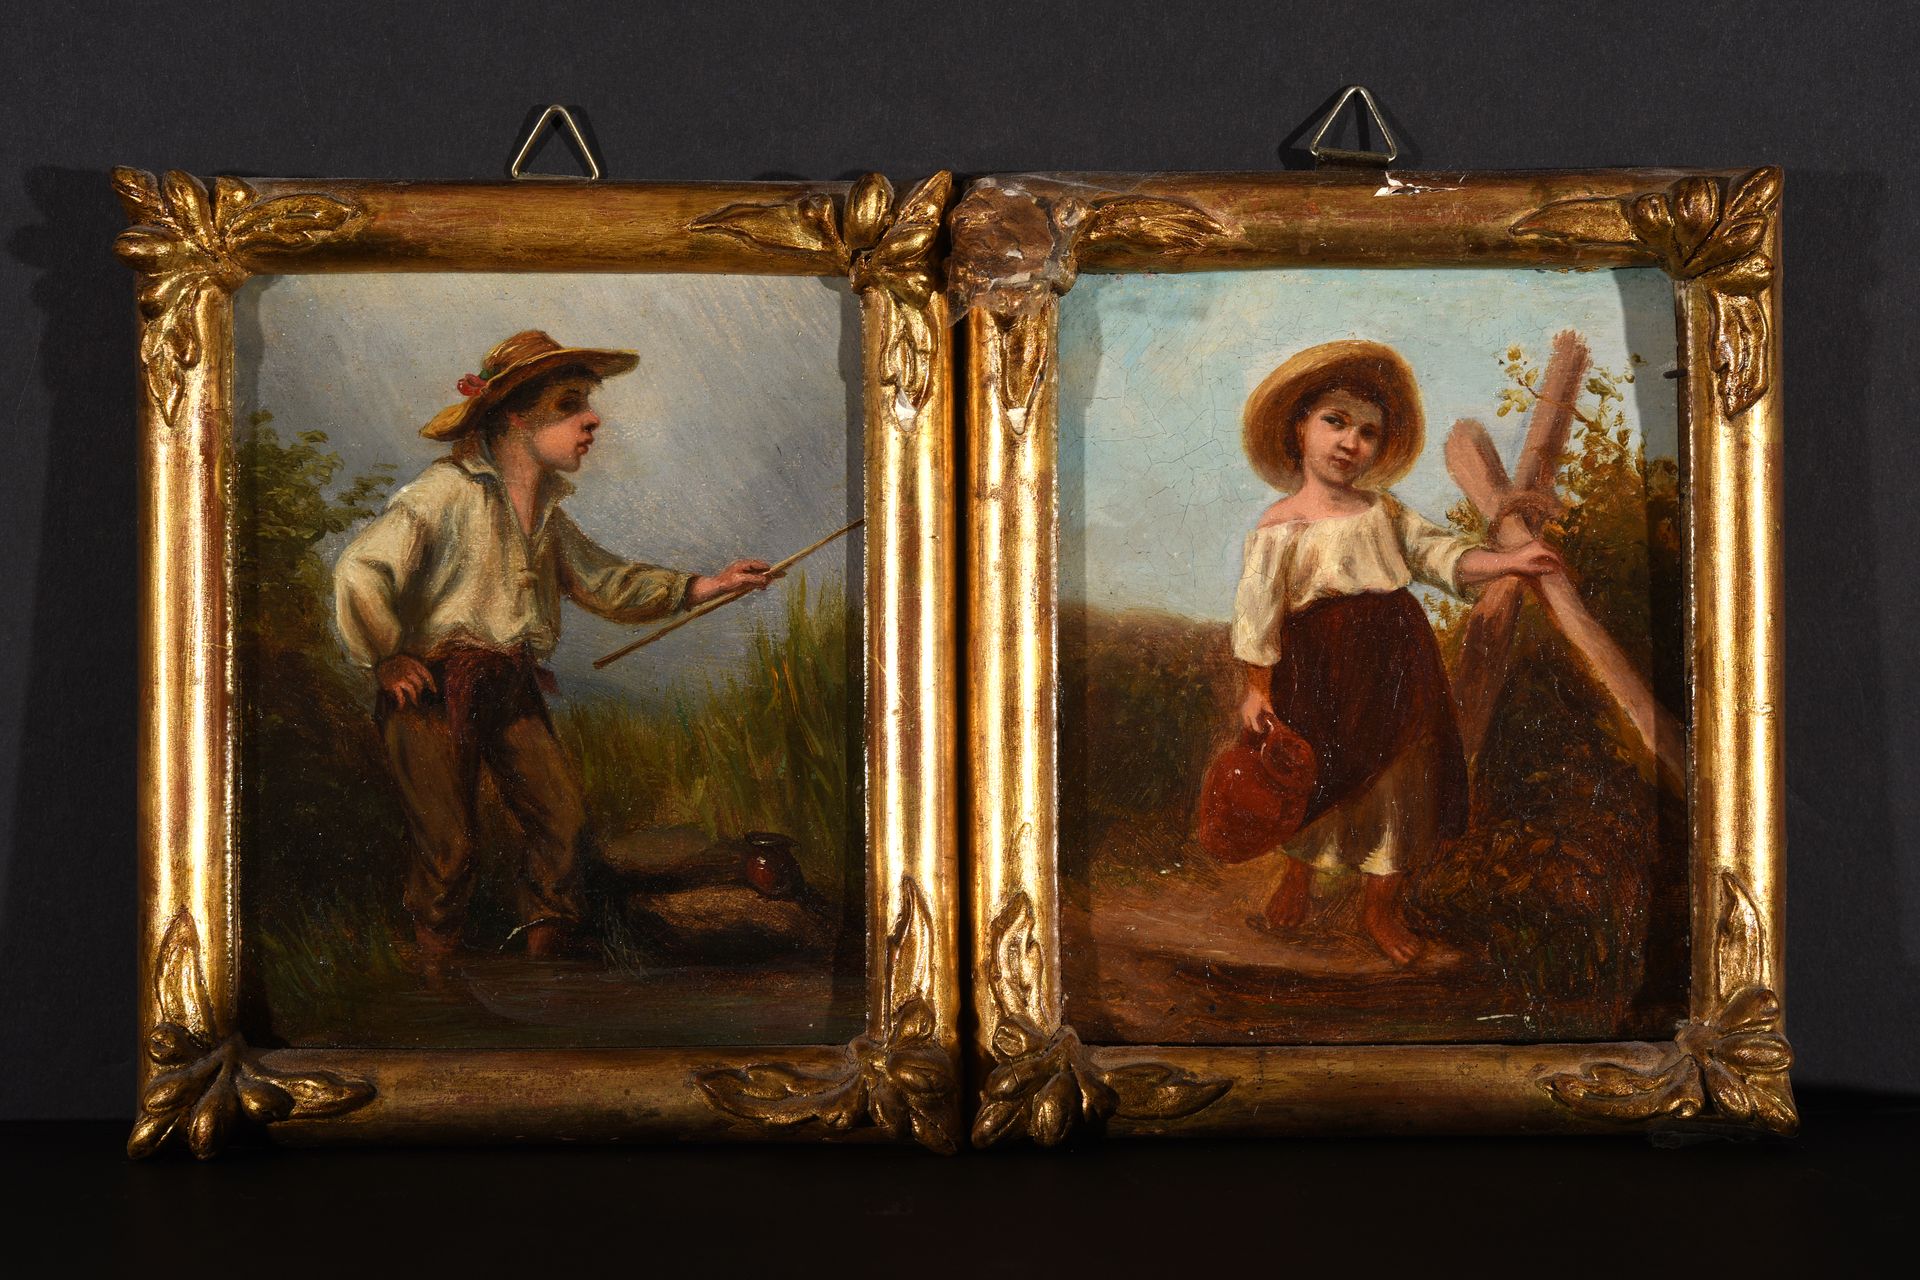 Null LANFANT DE METZ (1814-1892) ATTRIBUITO A

La ragazza con la brocca; Il picc&hellip;